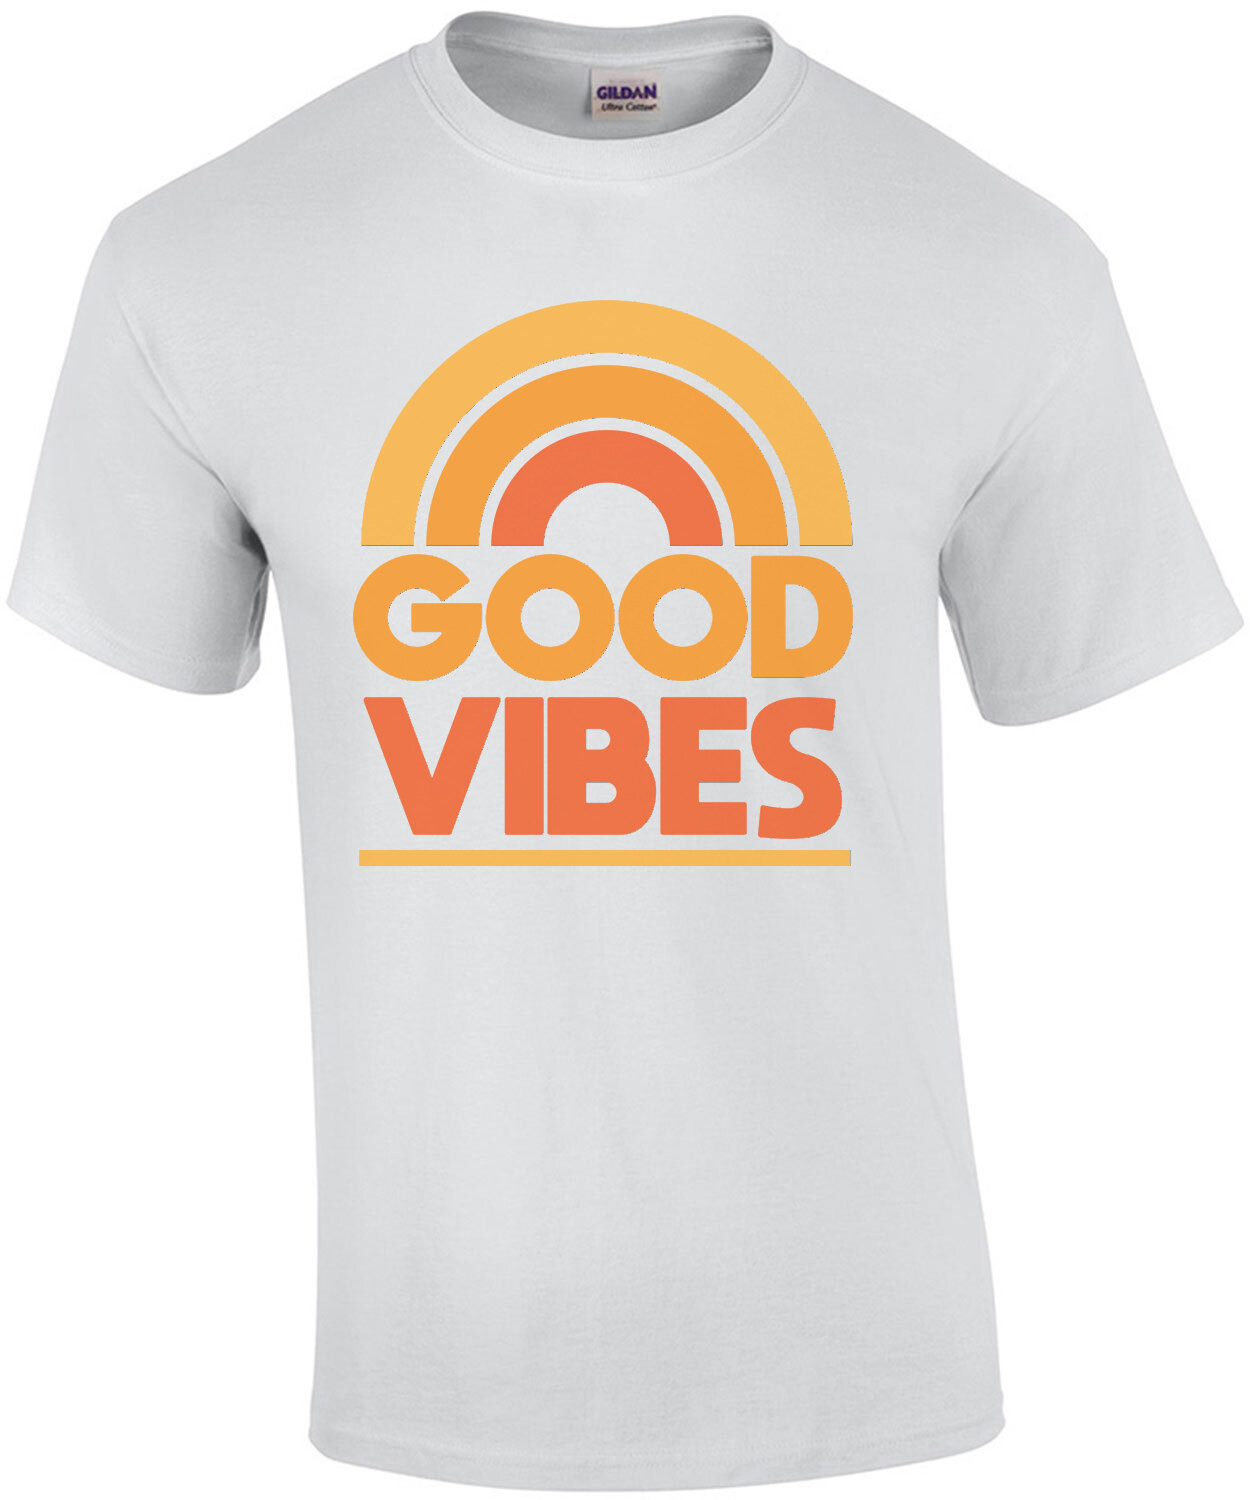 Good Vibes - Rainbow cool t-shirt